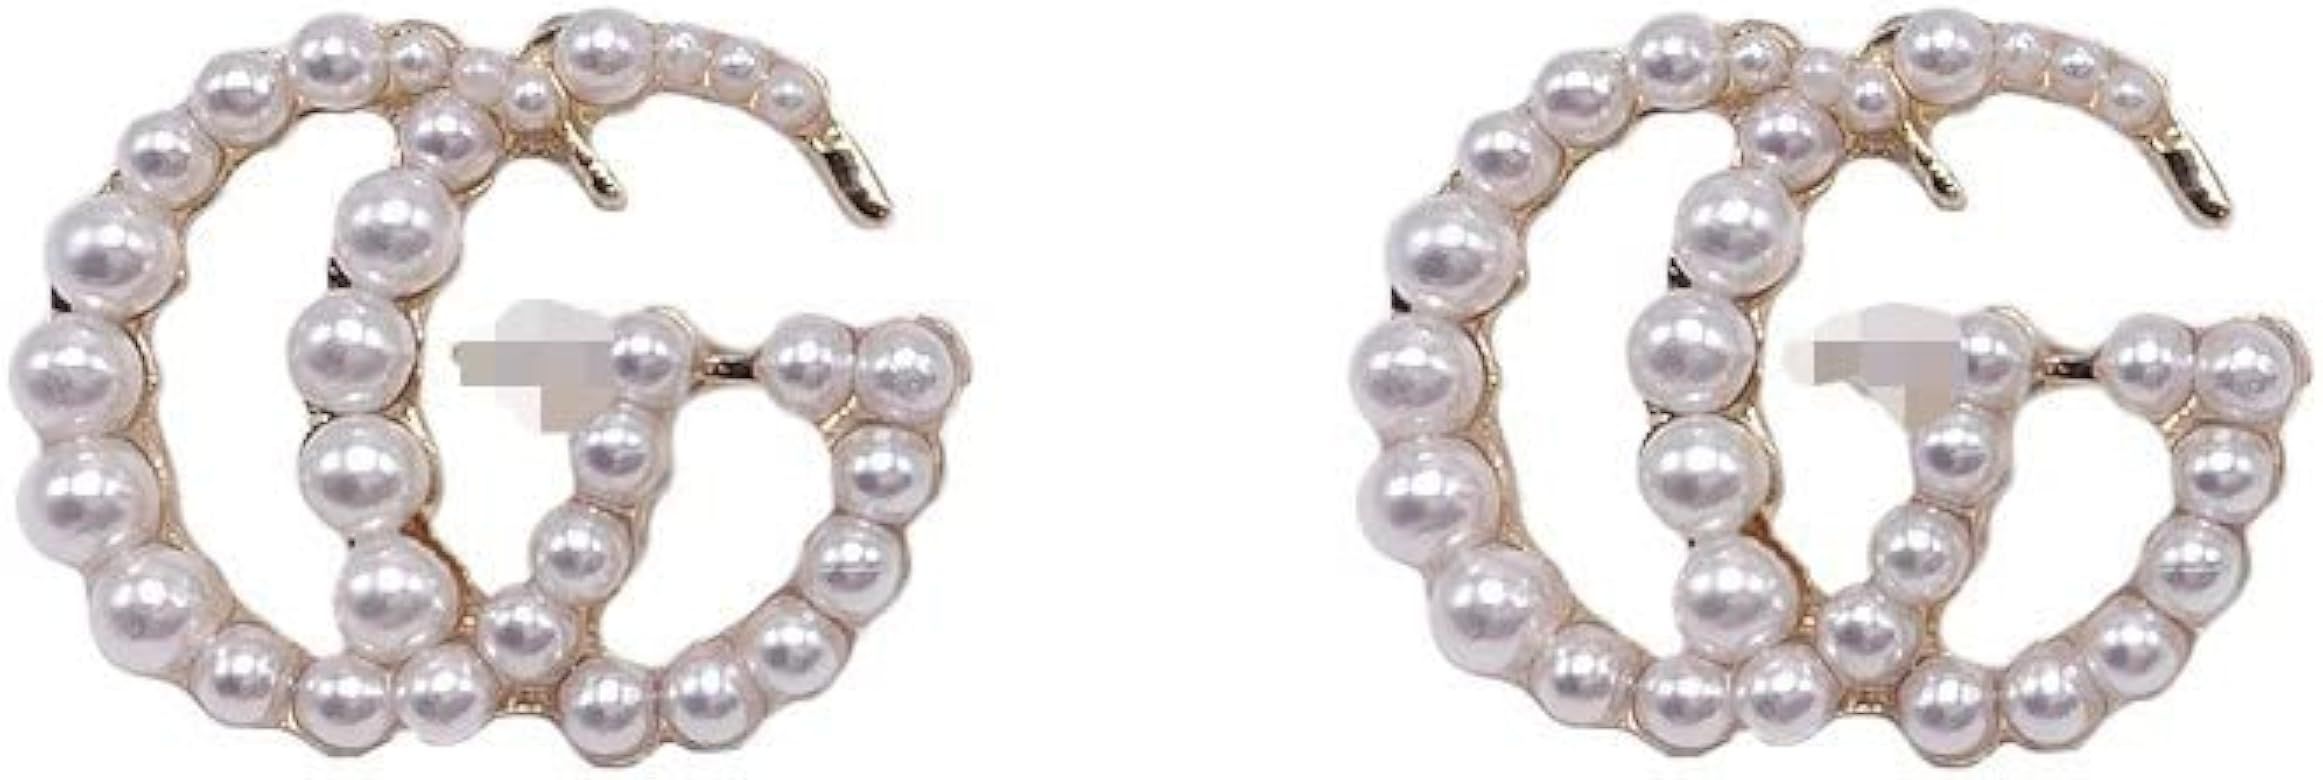 Imitation Earrings Double C Double G DR L.V Fashion Earrings For Women Girls Birthday Gift | Amazon (US)